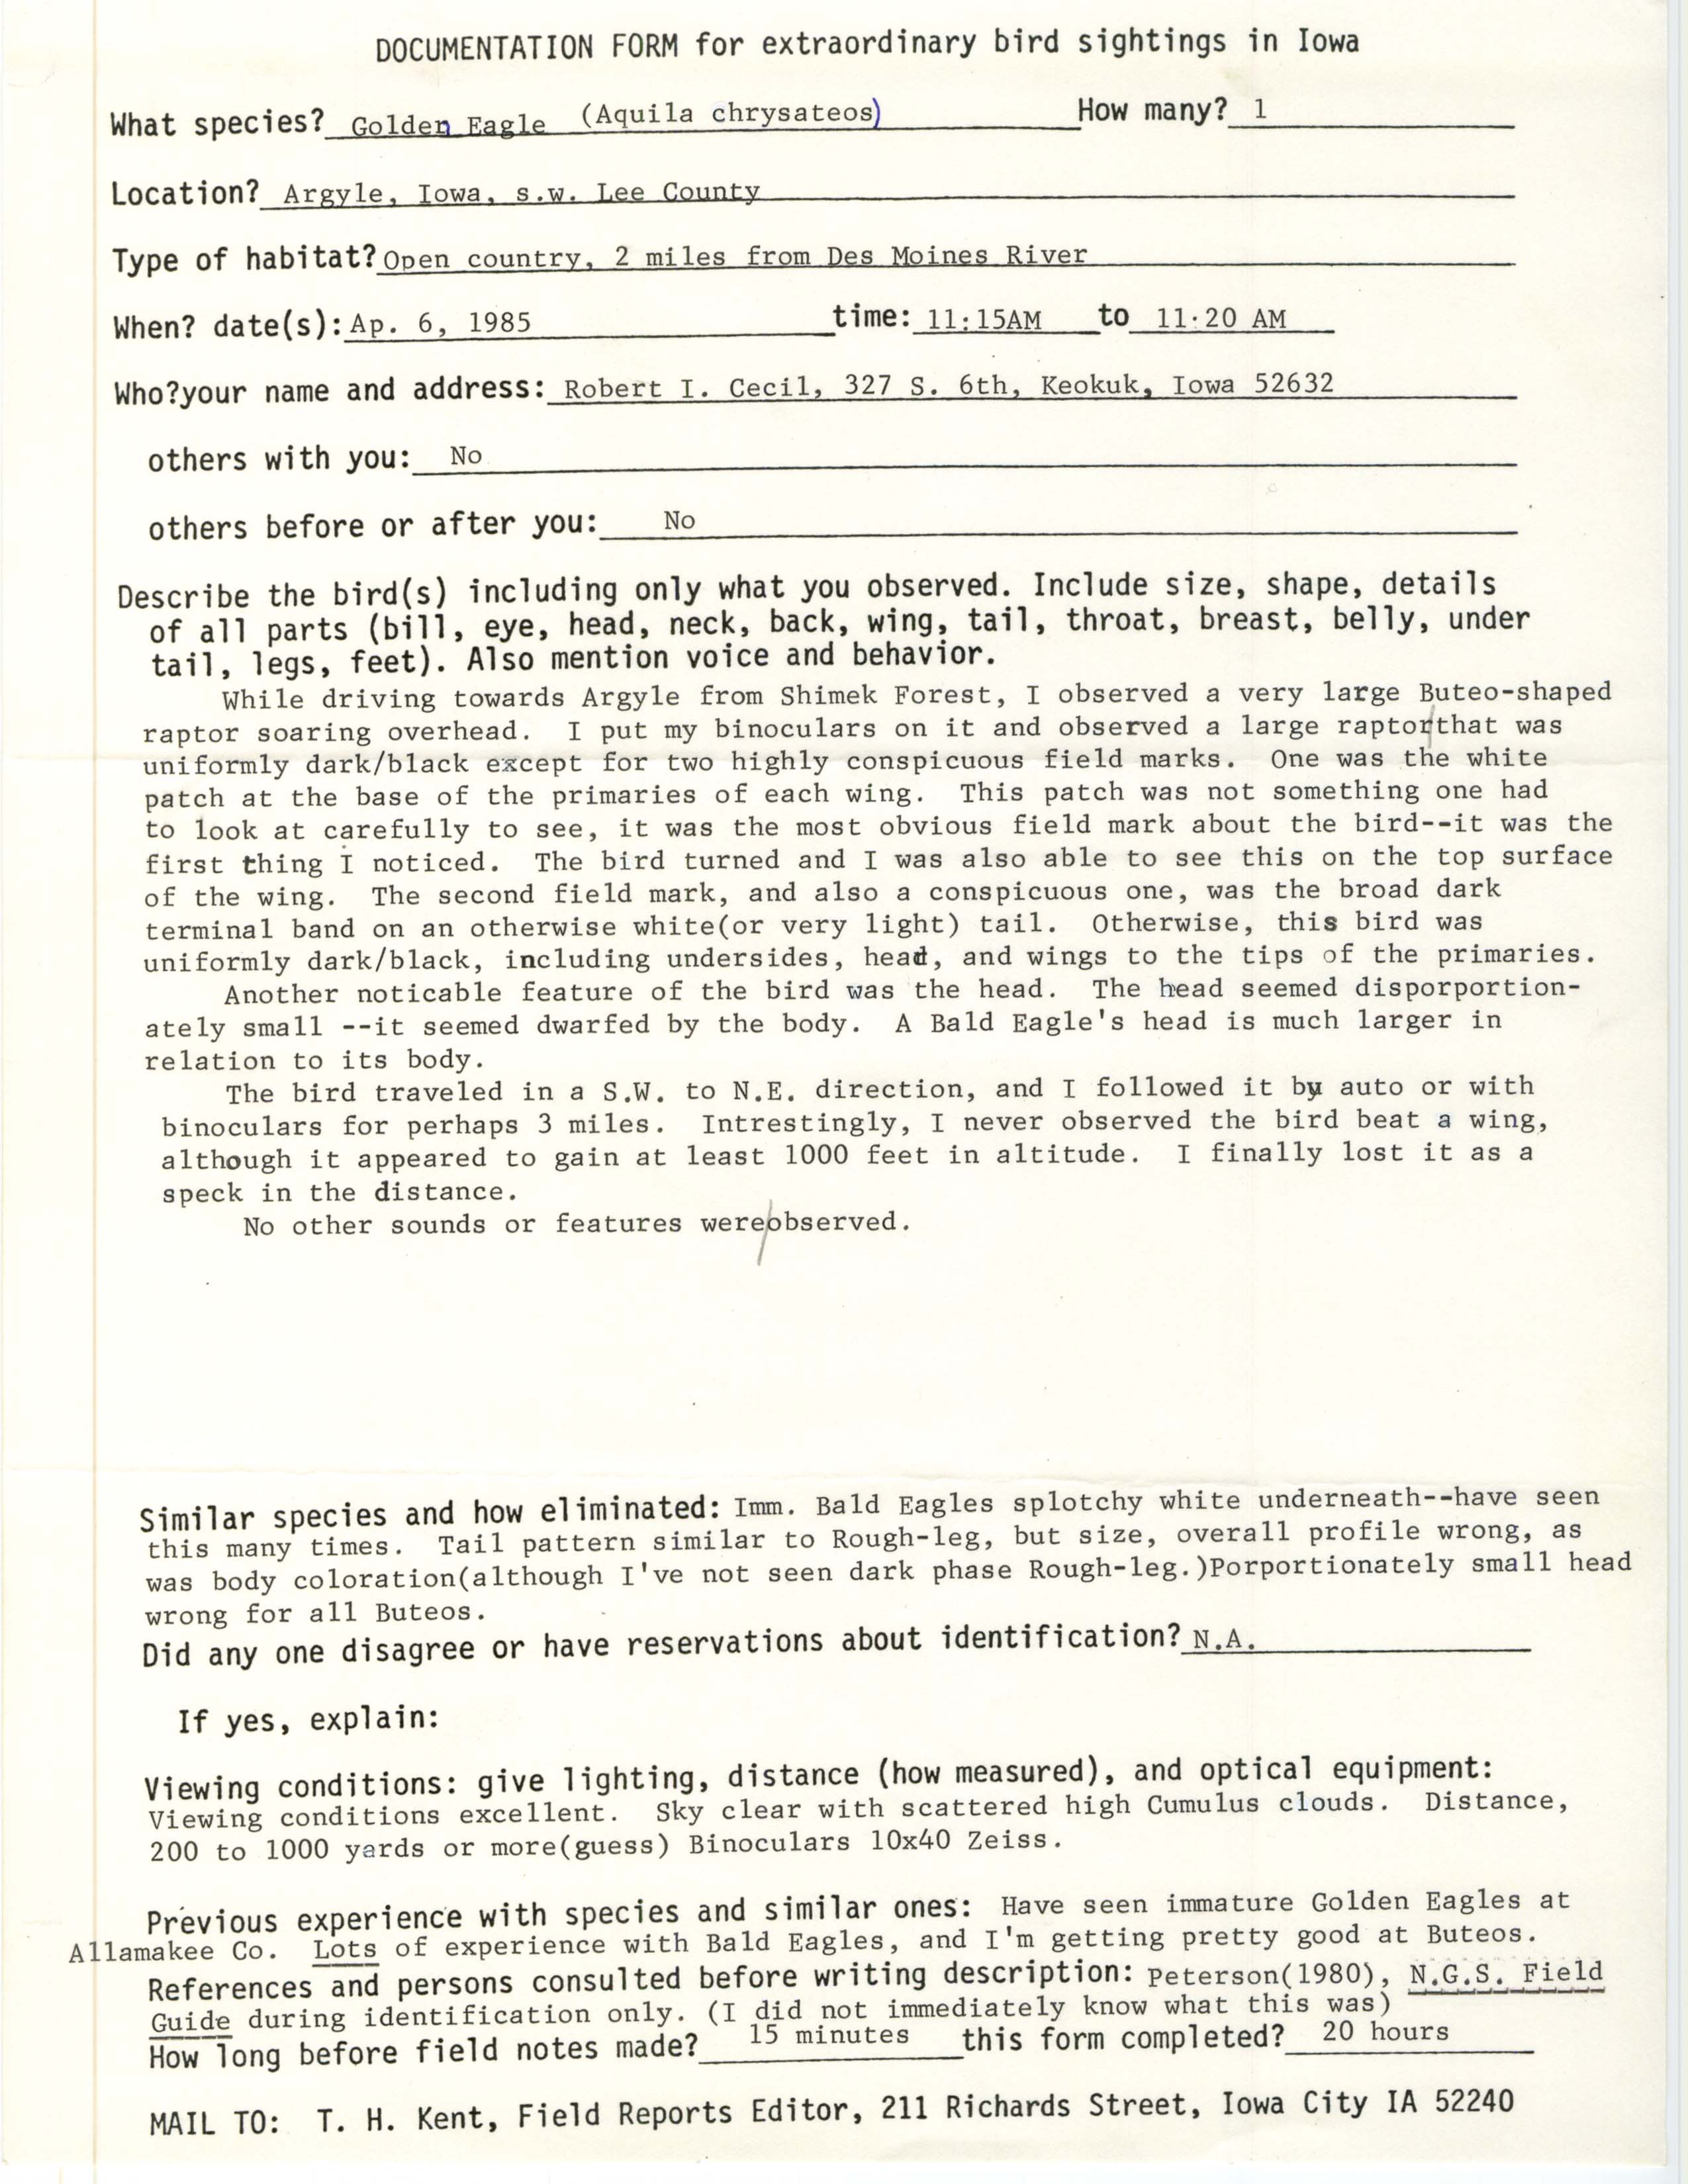 Rare bird documentation form for Golden Eagle at Argyle, 1985